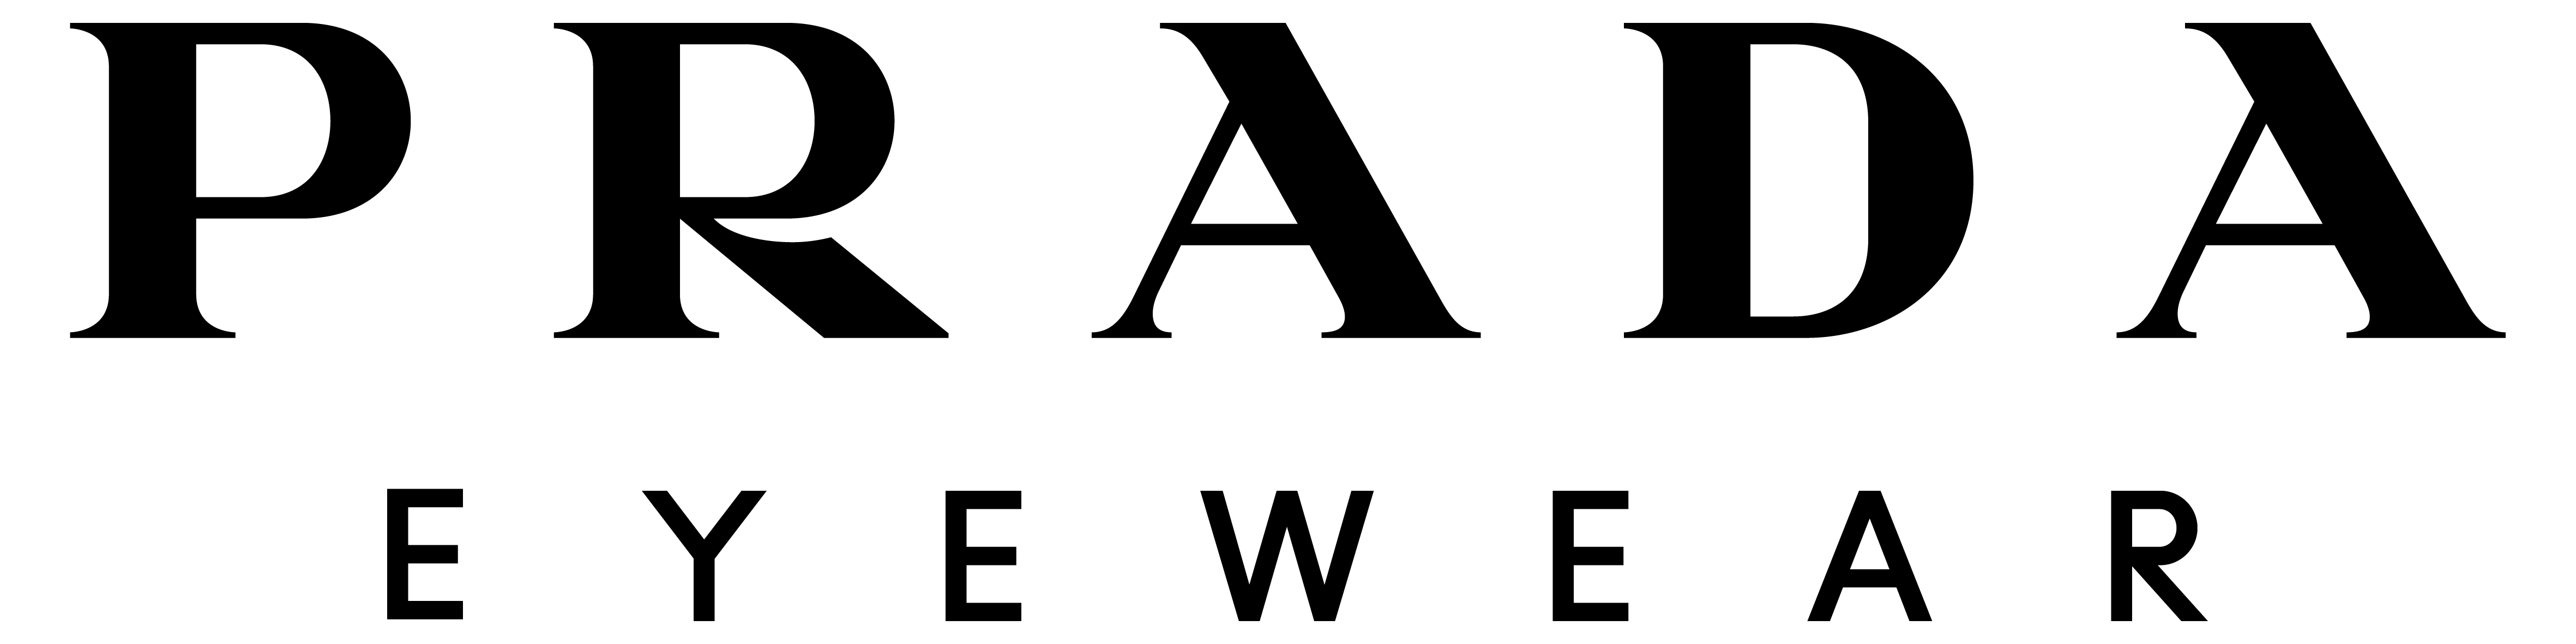 prada eyewear logo, OFF 74%,www 